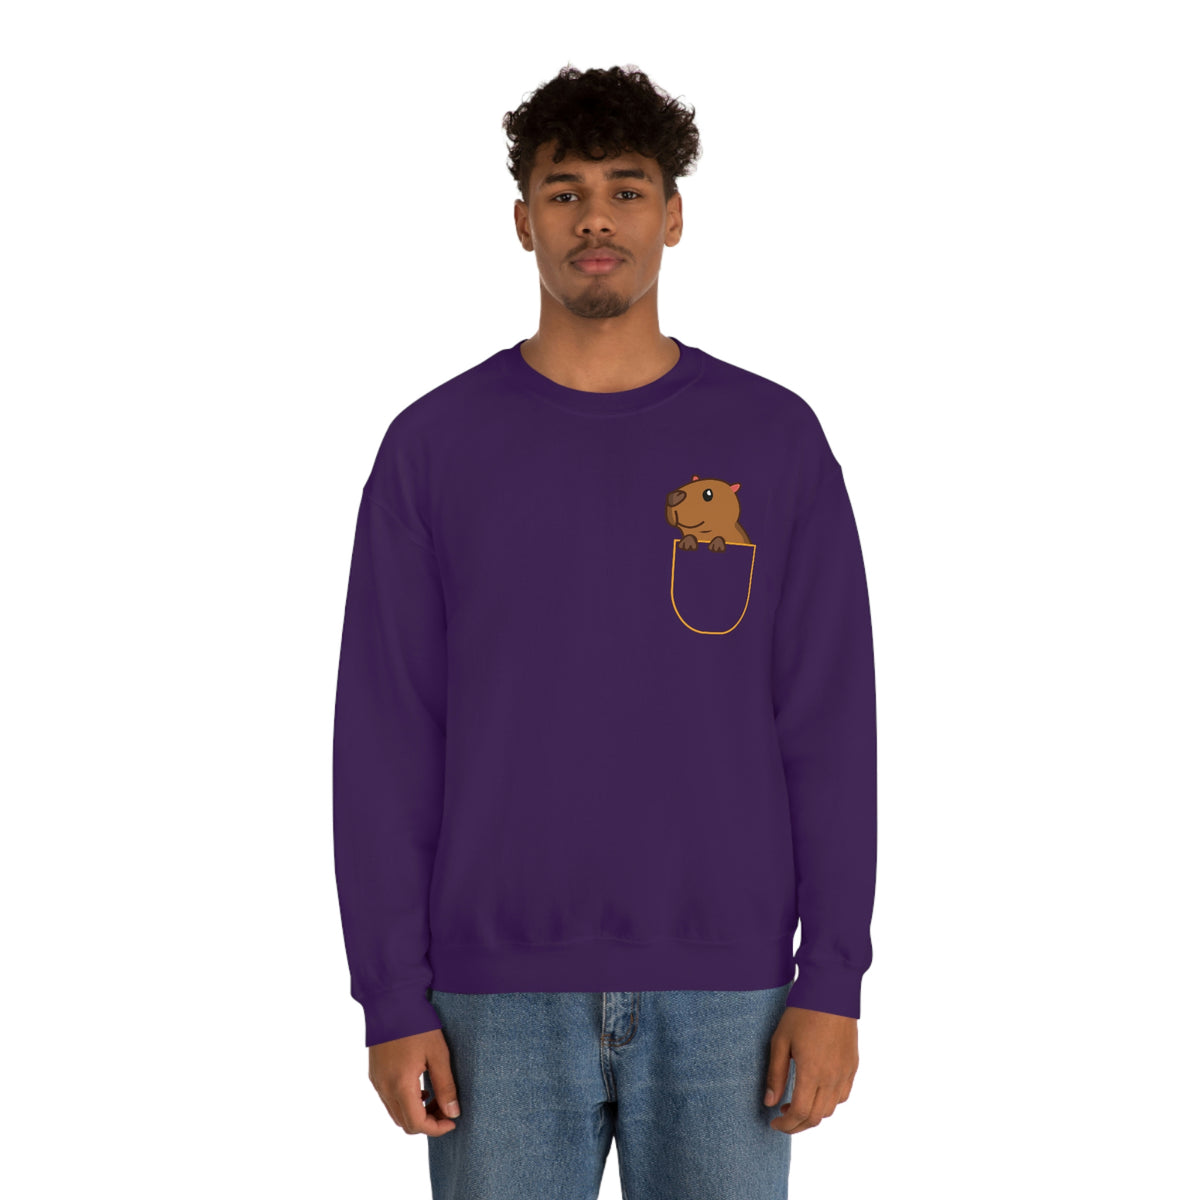 Capy on Pocket - Unisex Sweatshirt